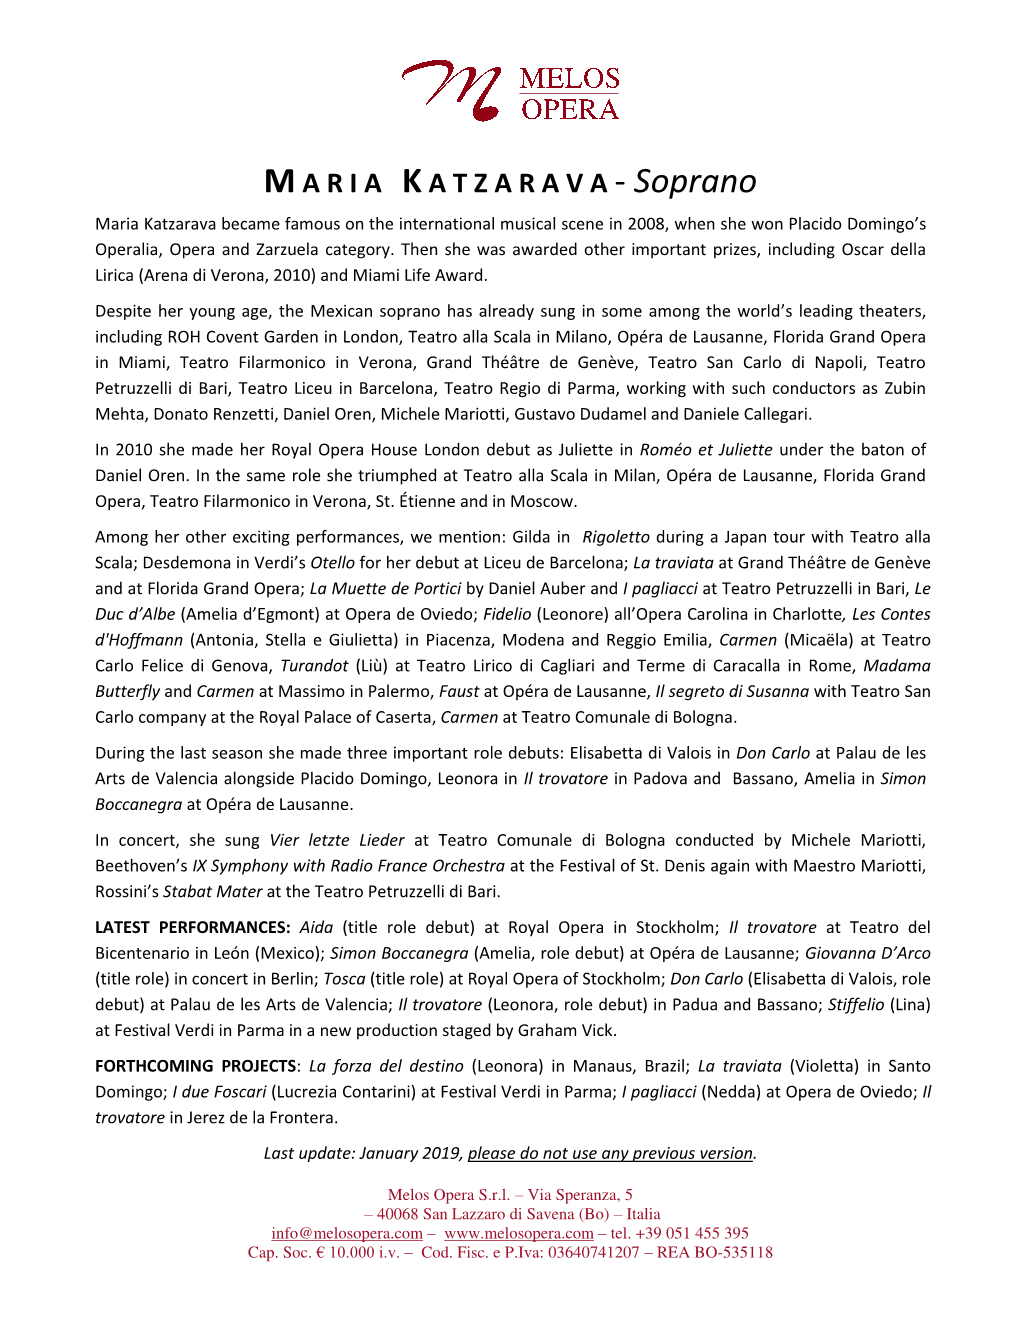 Maria Katzarava Became Famous on the International Musical Scene in 2008, When She Won Placido Domingo’S Operalia, Opera and Zarzuela Category